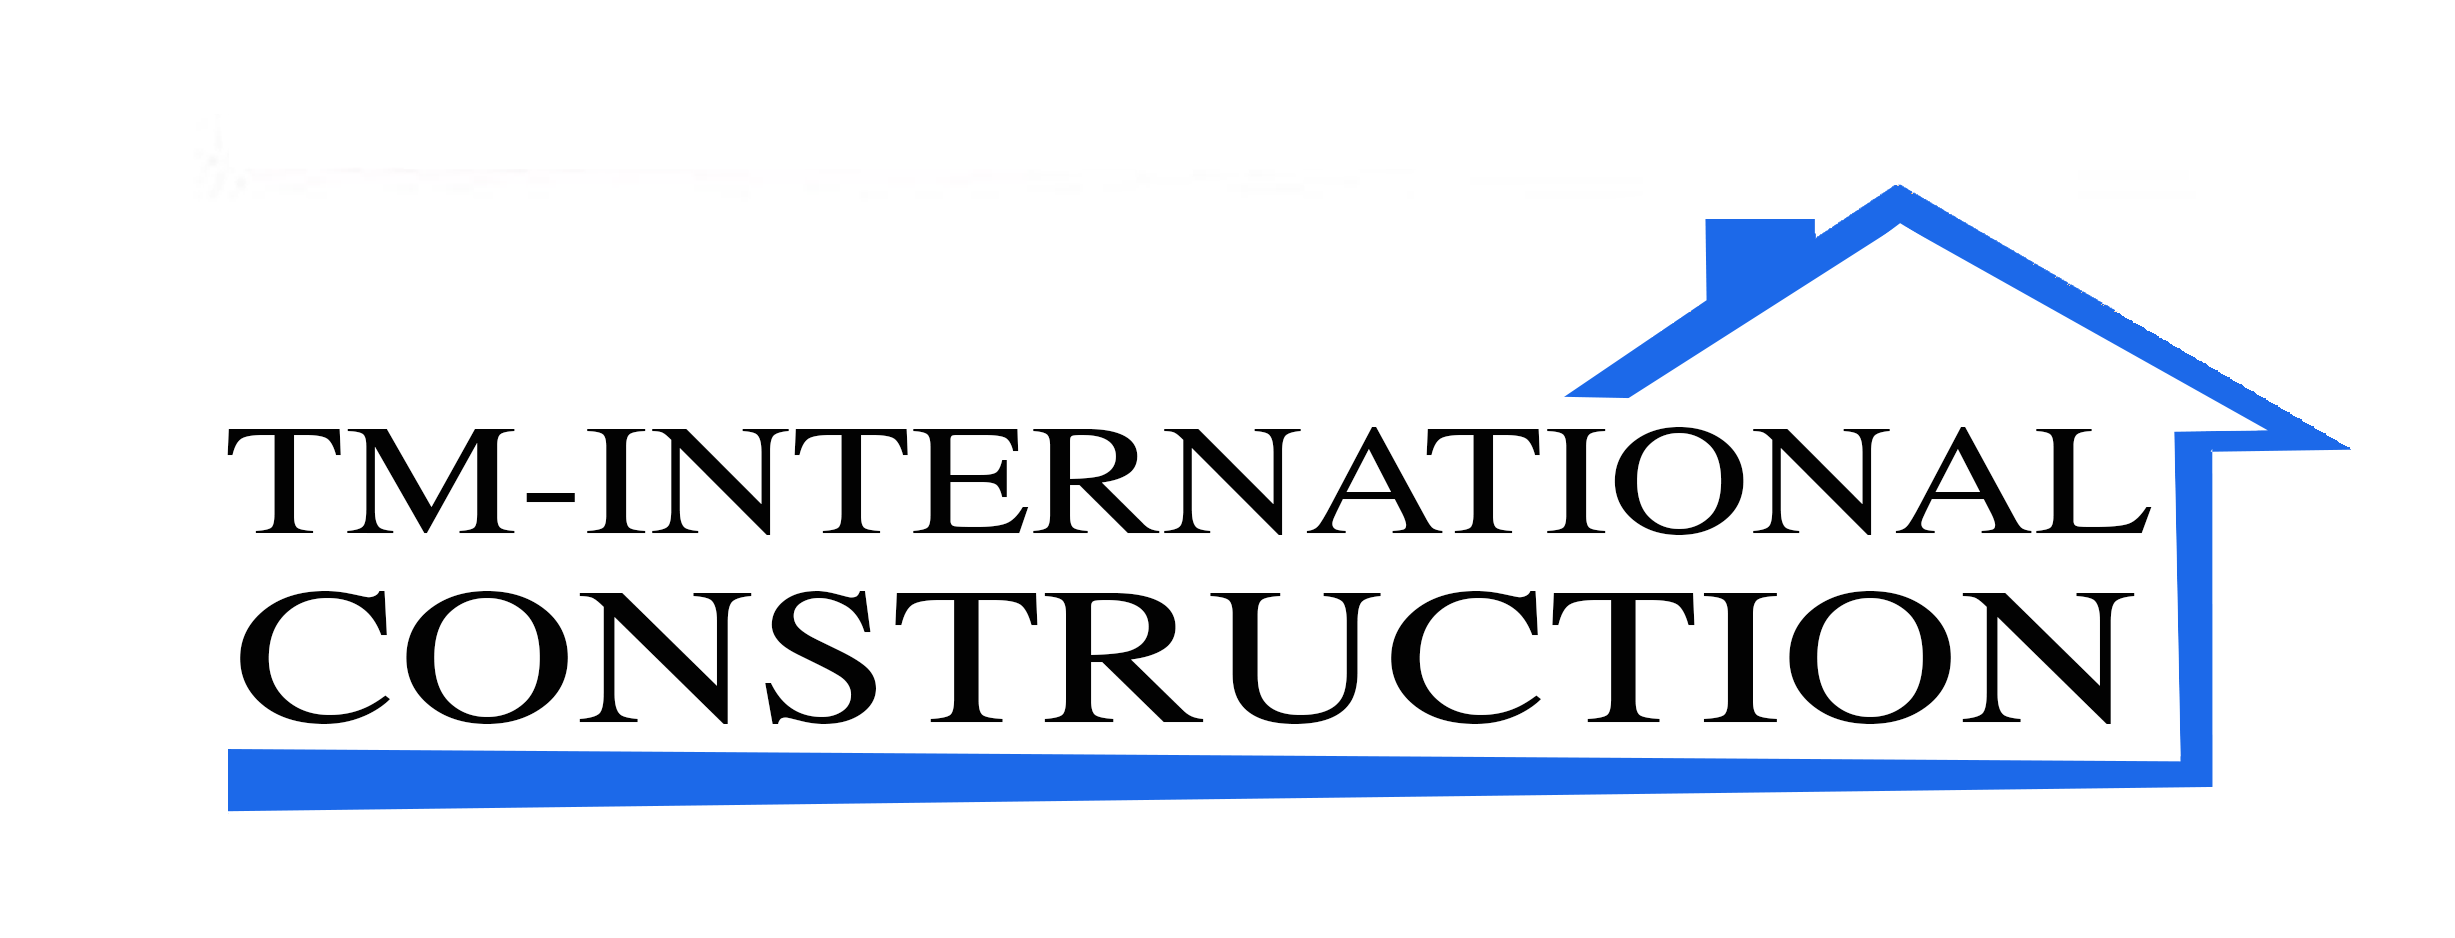 TM INTERNATIONAL CONSTRUCTION logo